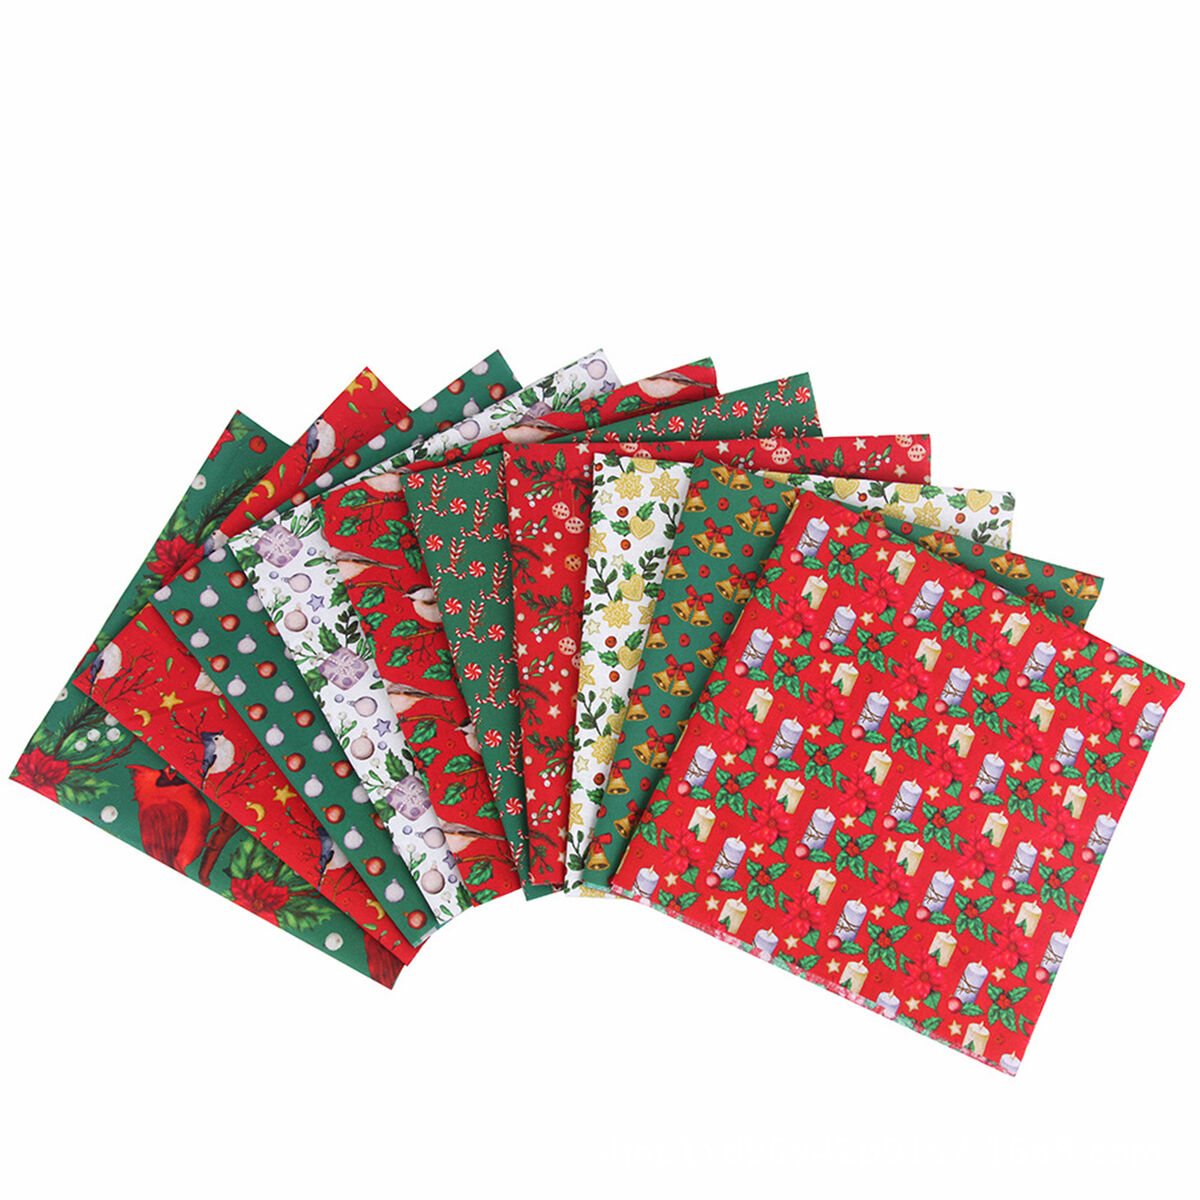 10 Pieces Cotton Fabric Christmas Fabric Precut Quilting Squares